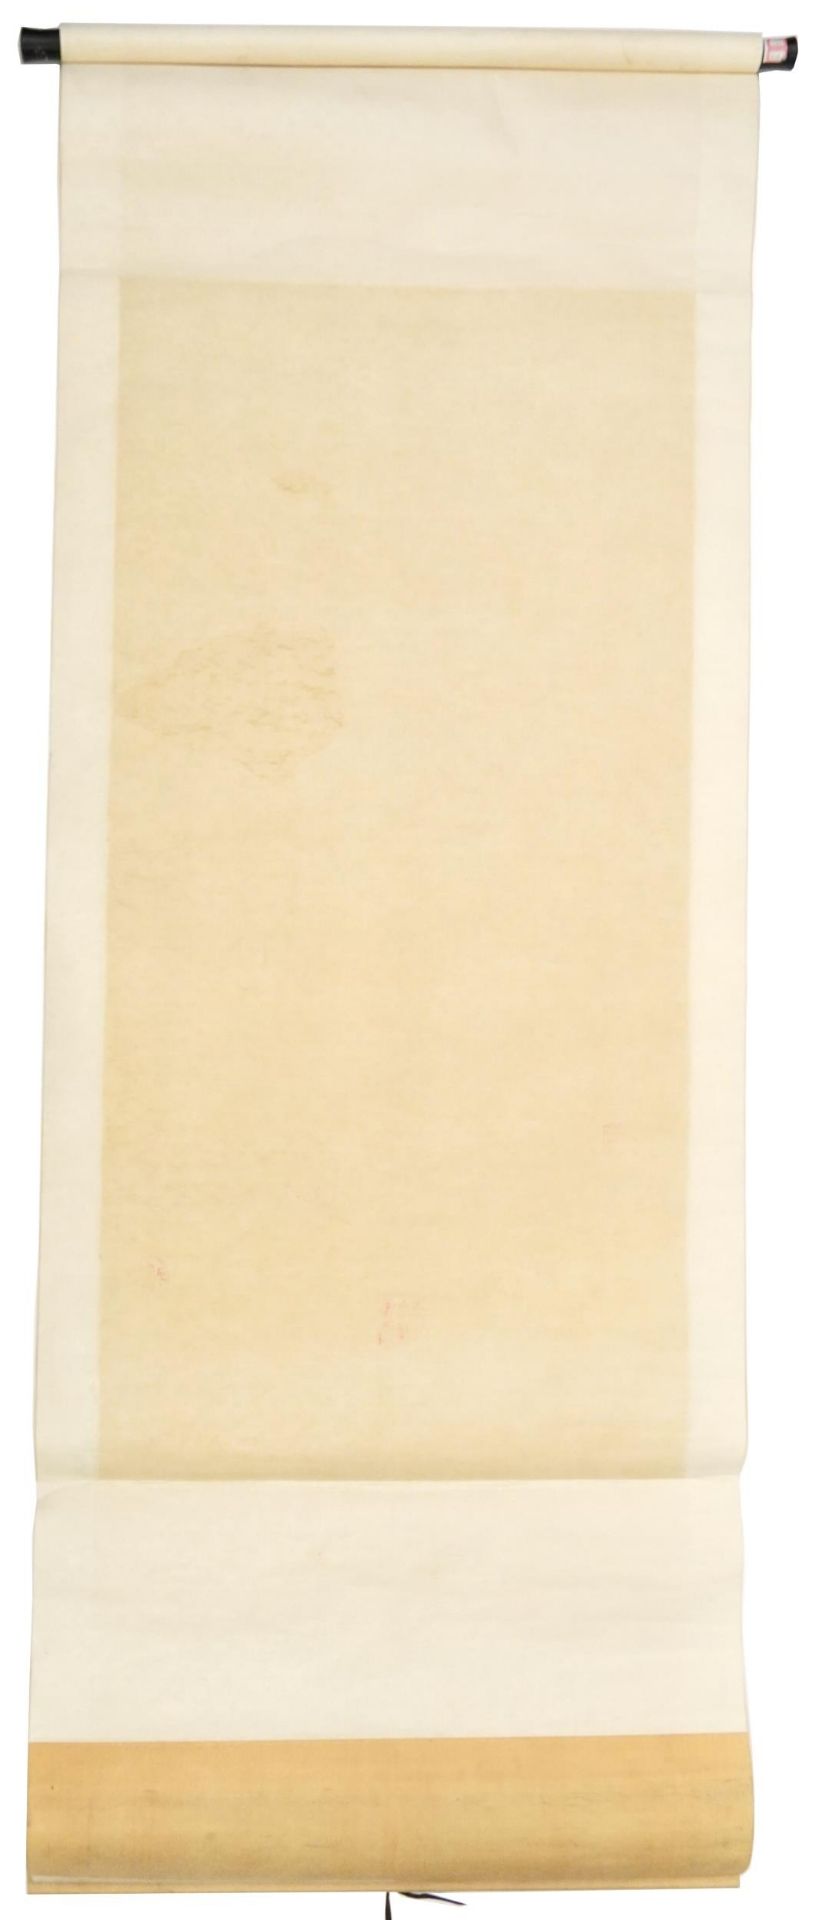 Cursive handwriting, Chinese ink on gilt covered wax paper, Chinese scroll, 133cm x 66cm - Bild 4 aus 4